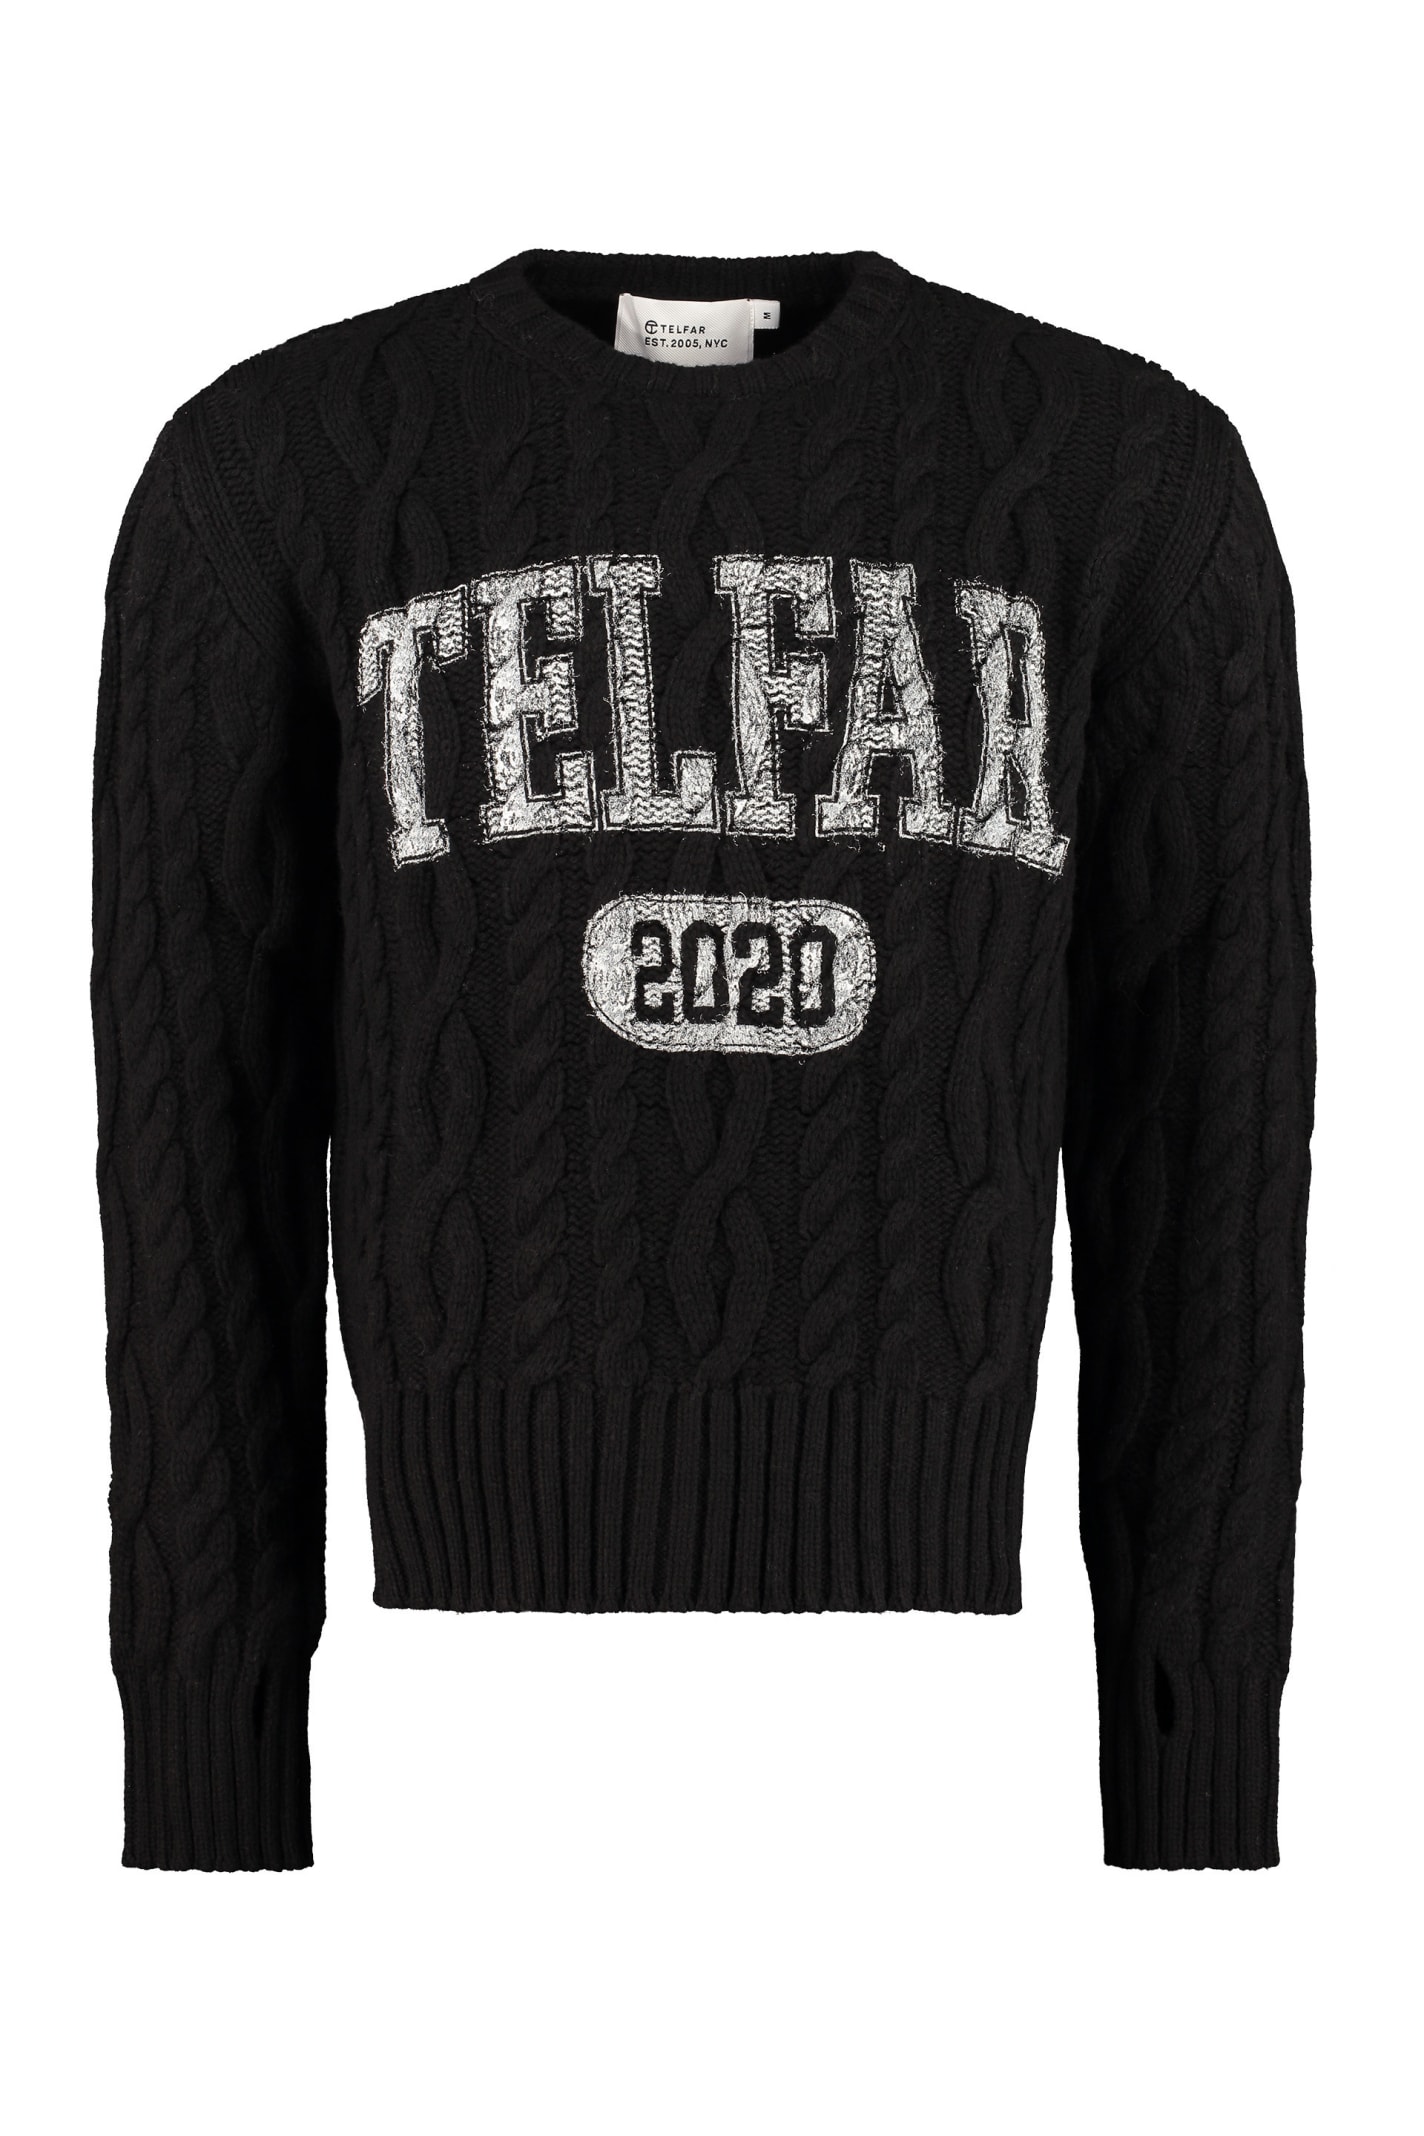 Telfar Cable Knit Pullover